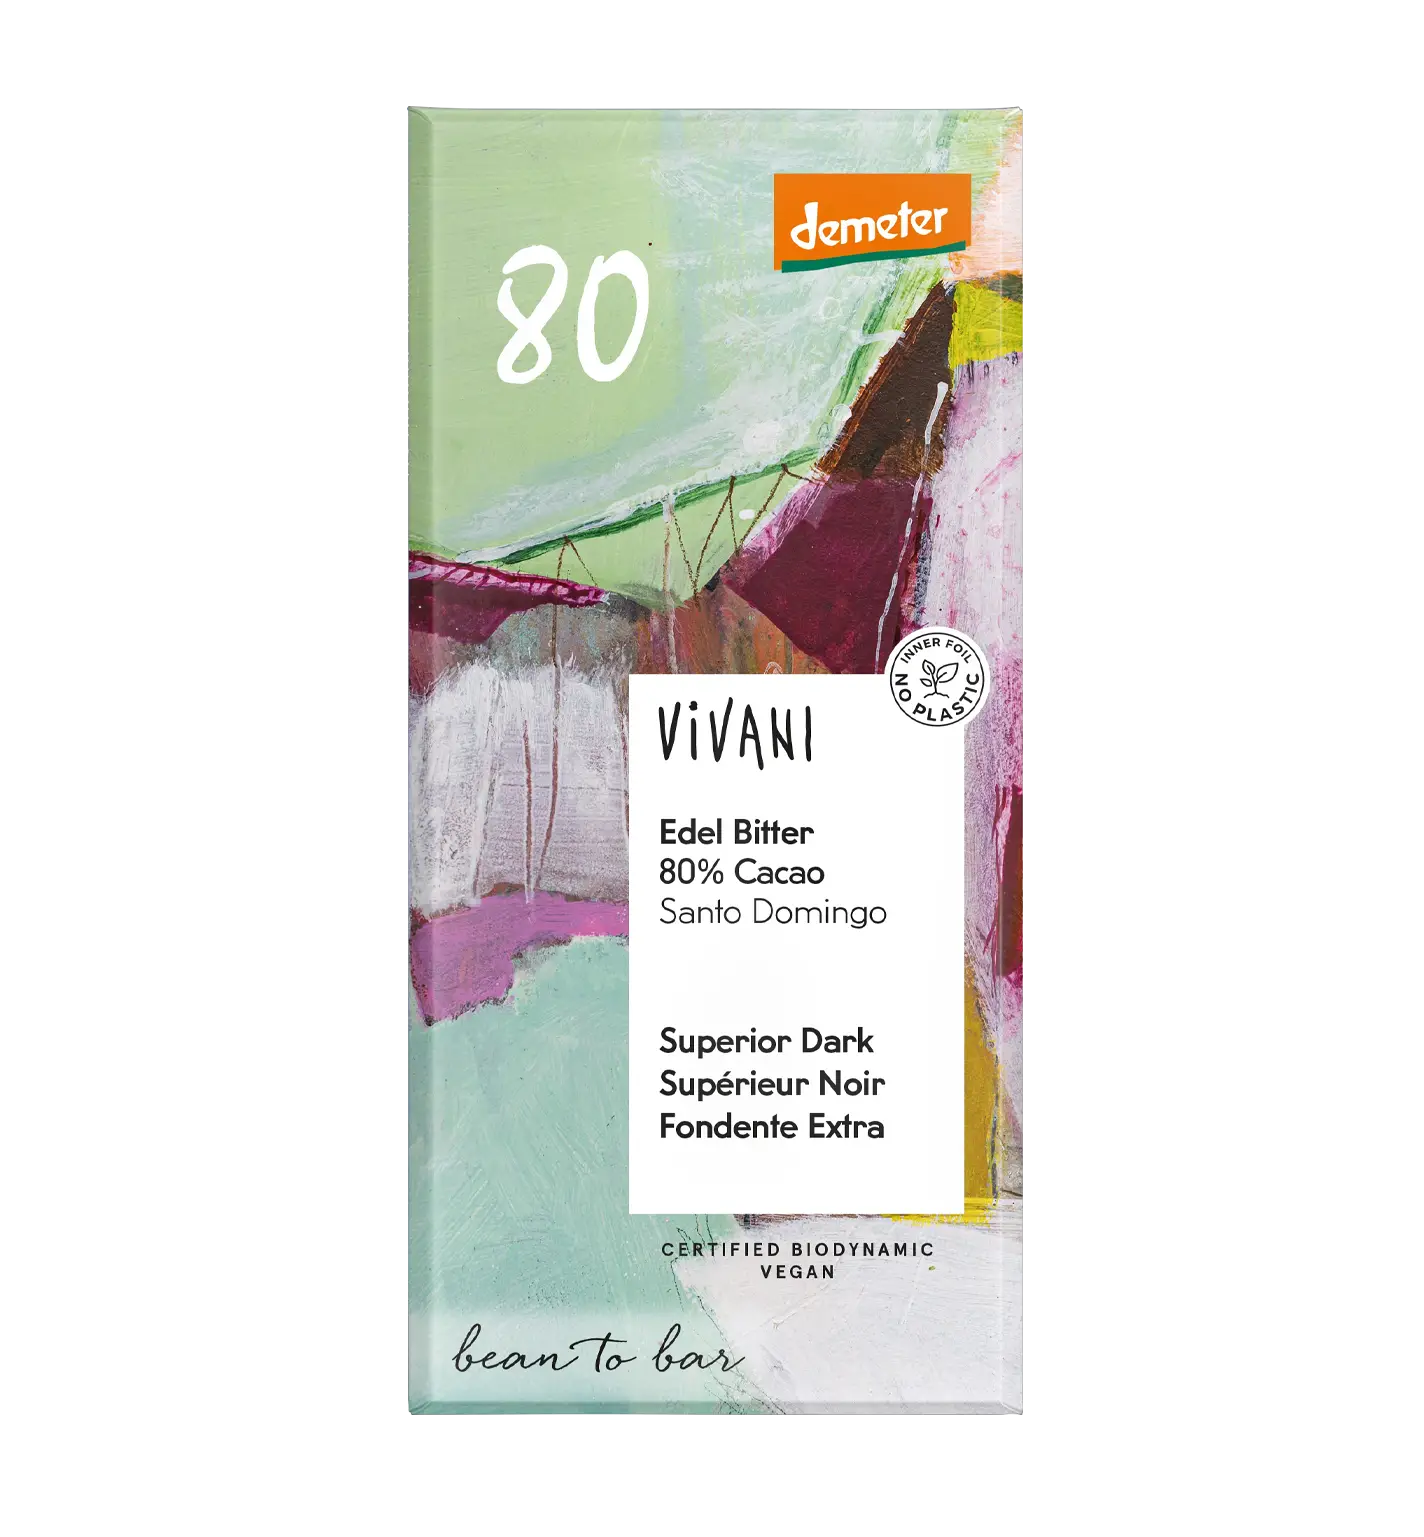 VIVANI's vegan Superior Dark Chocolate with 80 percent organic and biodynamic cocoa from the Dominican Republic